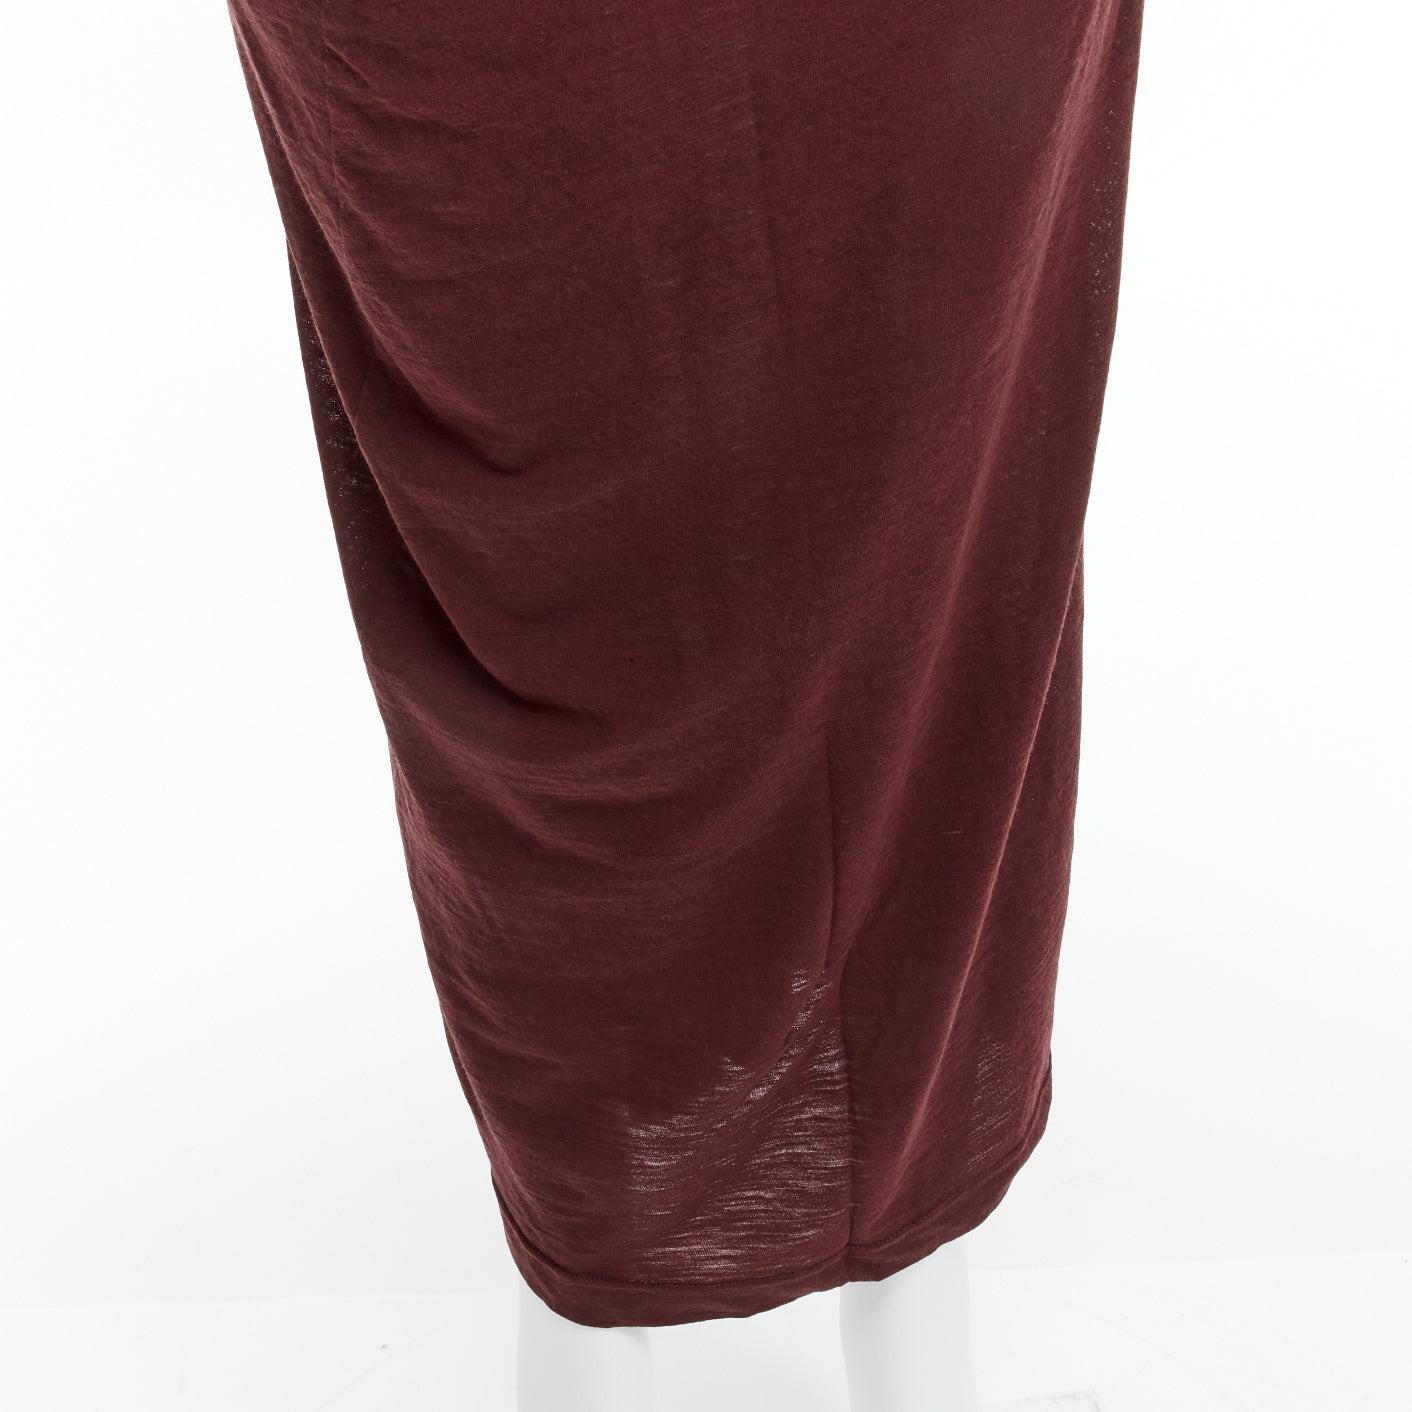 CDG COMME DES GARCONS burgundy brown bias cut stretch top midi skirt set S For Sale 4